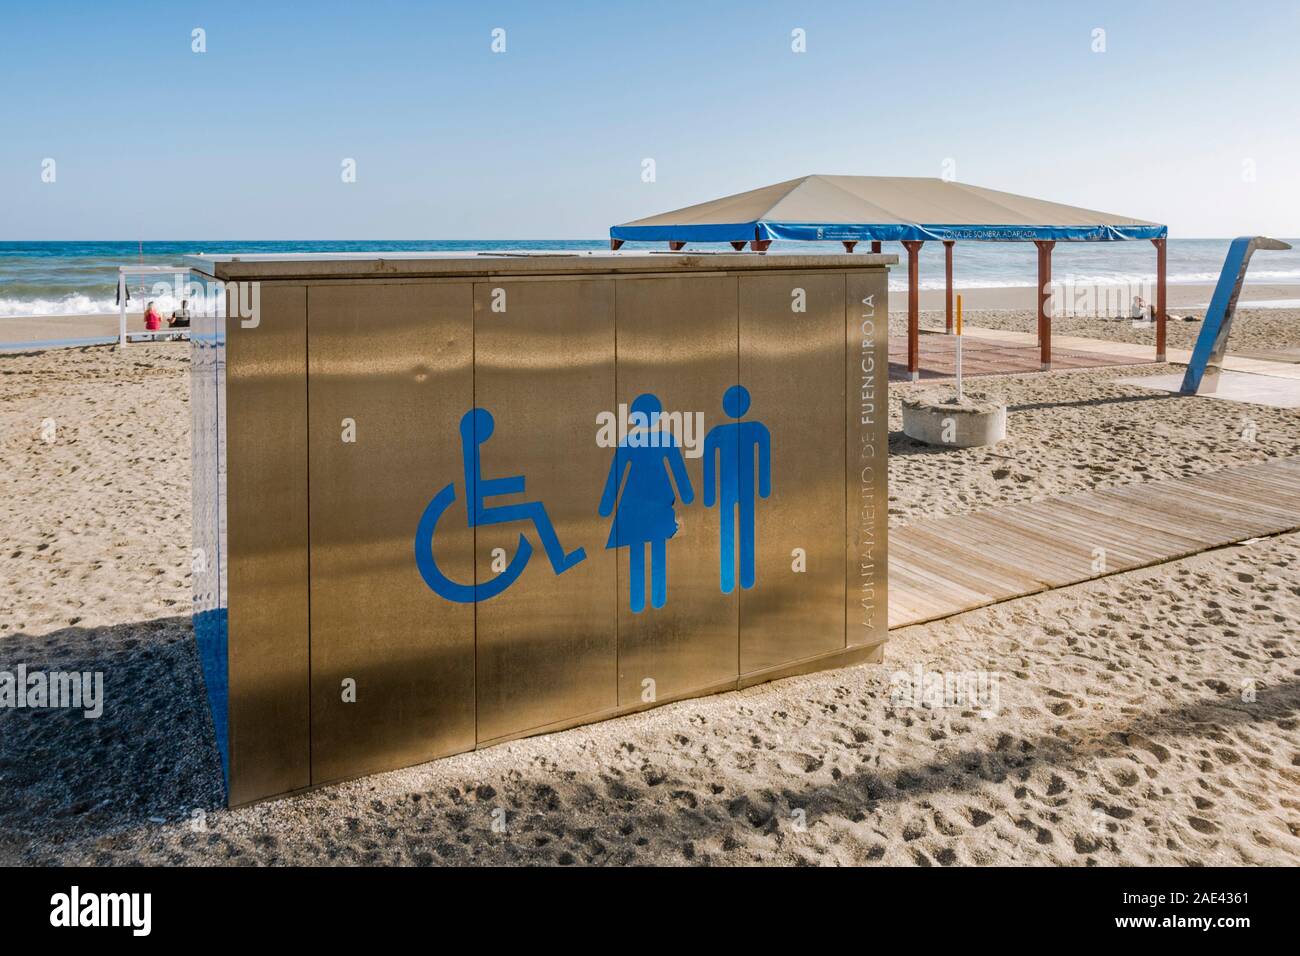 Public toilet cabin on beach, Fuengirola, Costa del Sol, Southern Spain Stock Photo